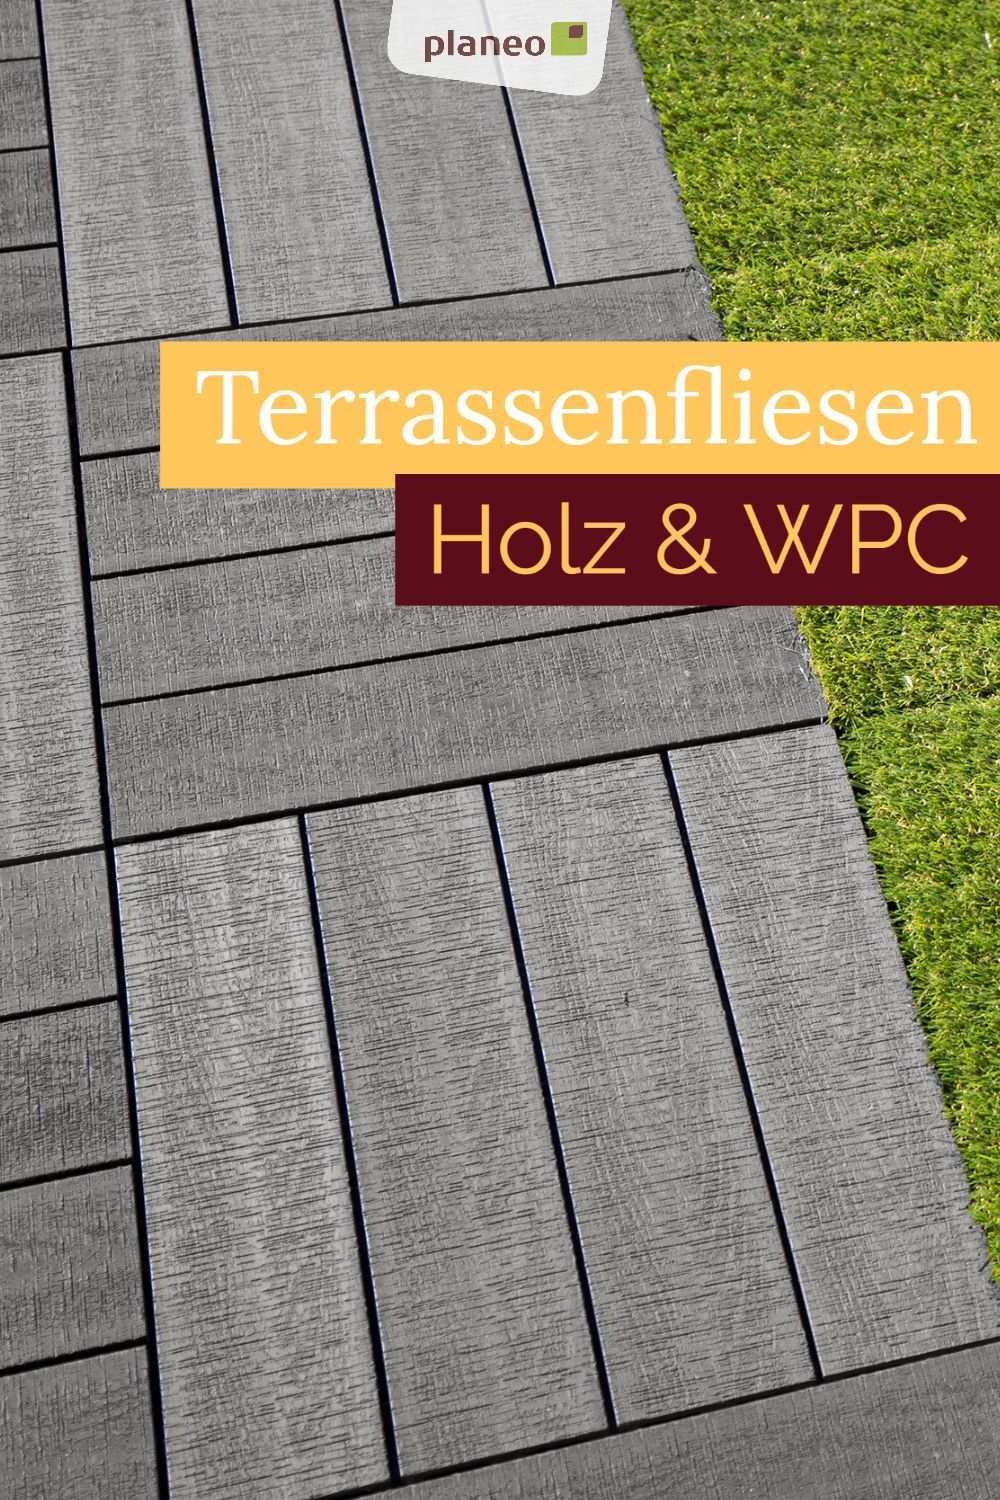 Hochwertige Terrassenplatten Holz Terrassenfliesen Und Wpc Terrassenfliesen In 2020 Terrassenfliesen Fliesen Terrasse Terrassenfliesen Holz